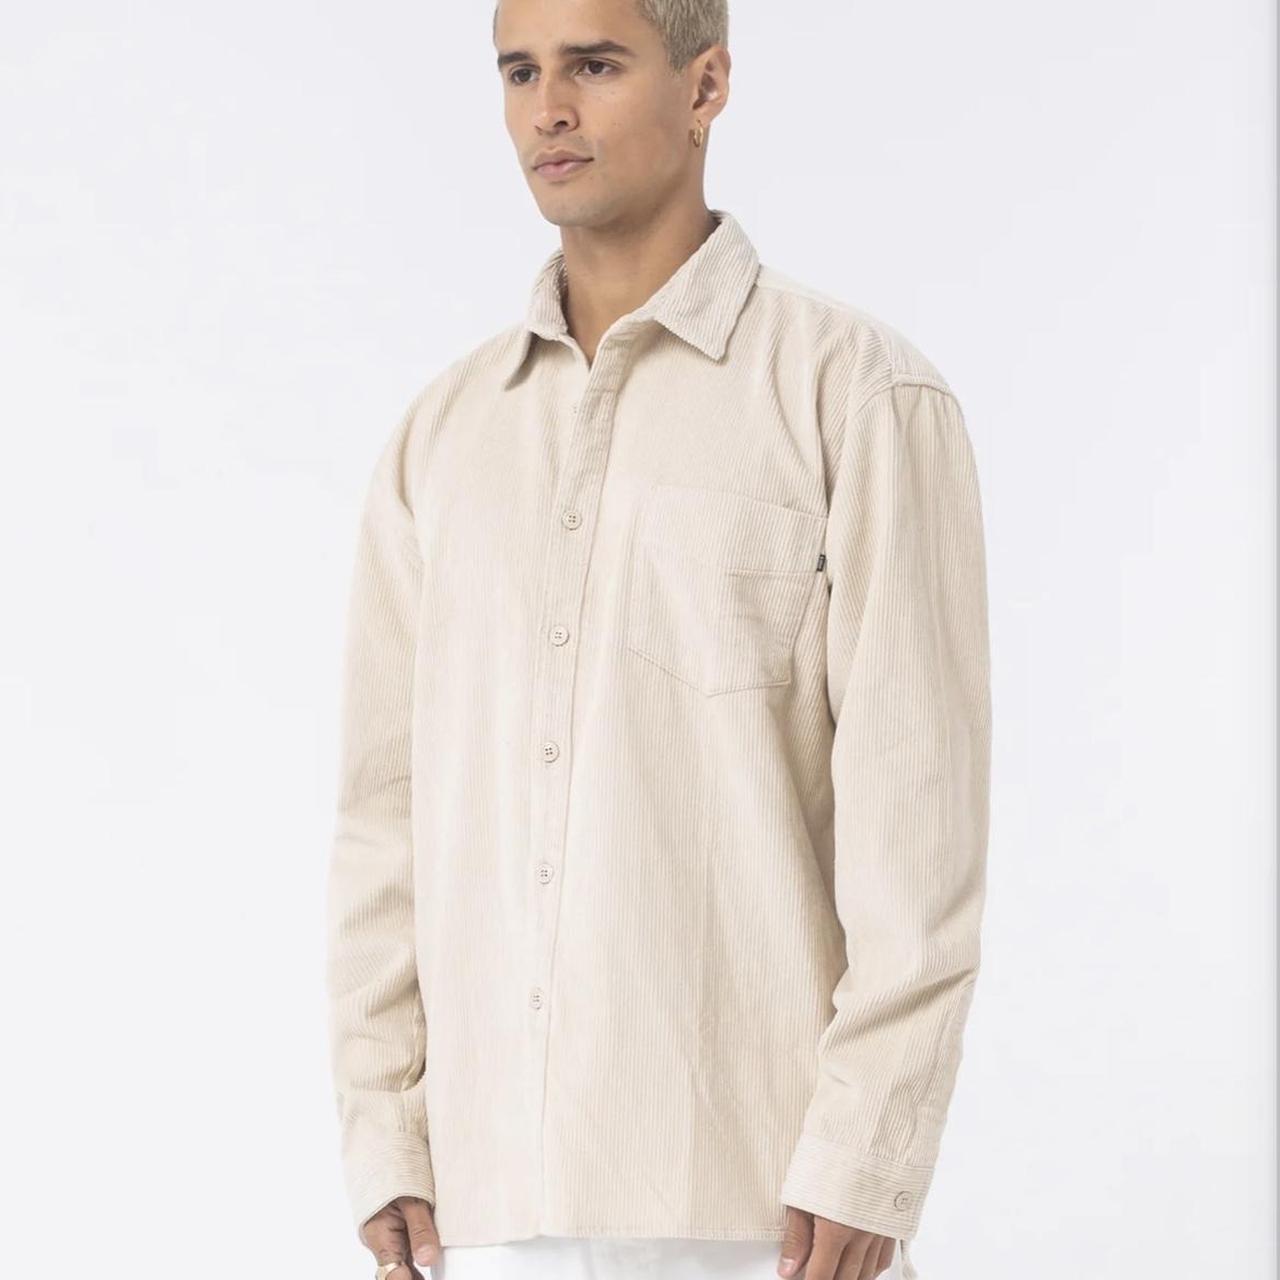 Barney Cools Men's Cream and White Shirt (4)